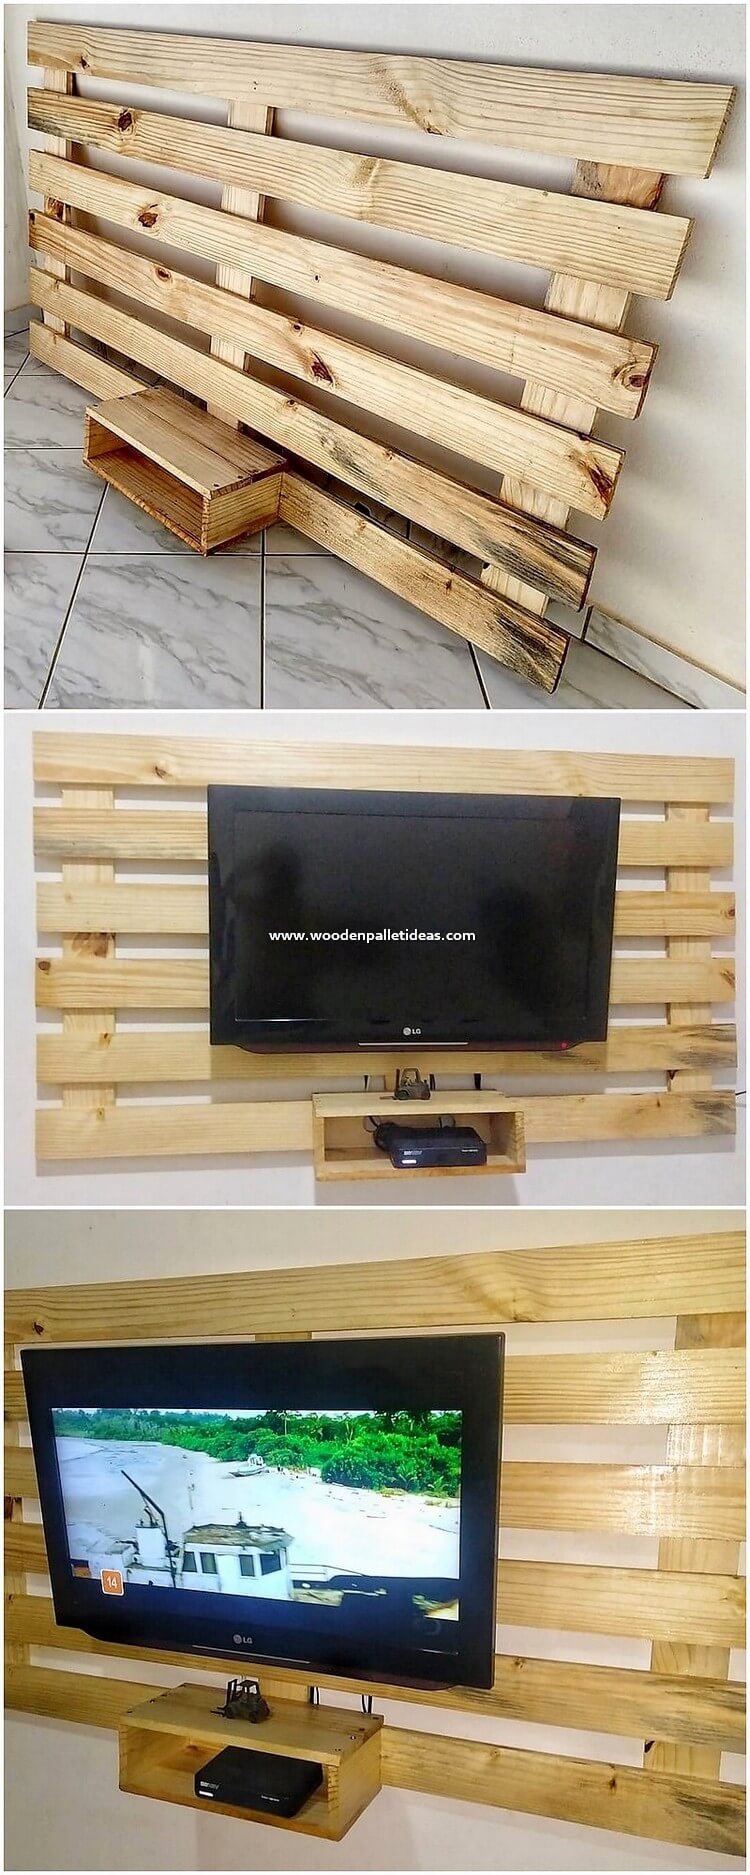 Wood Pallet Wall LED Holder